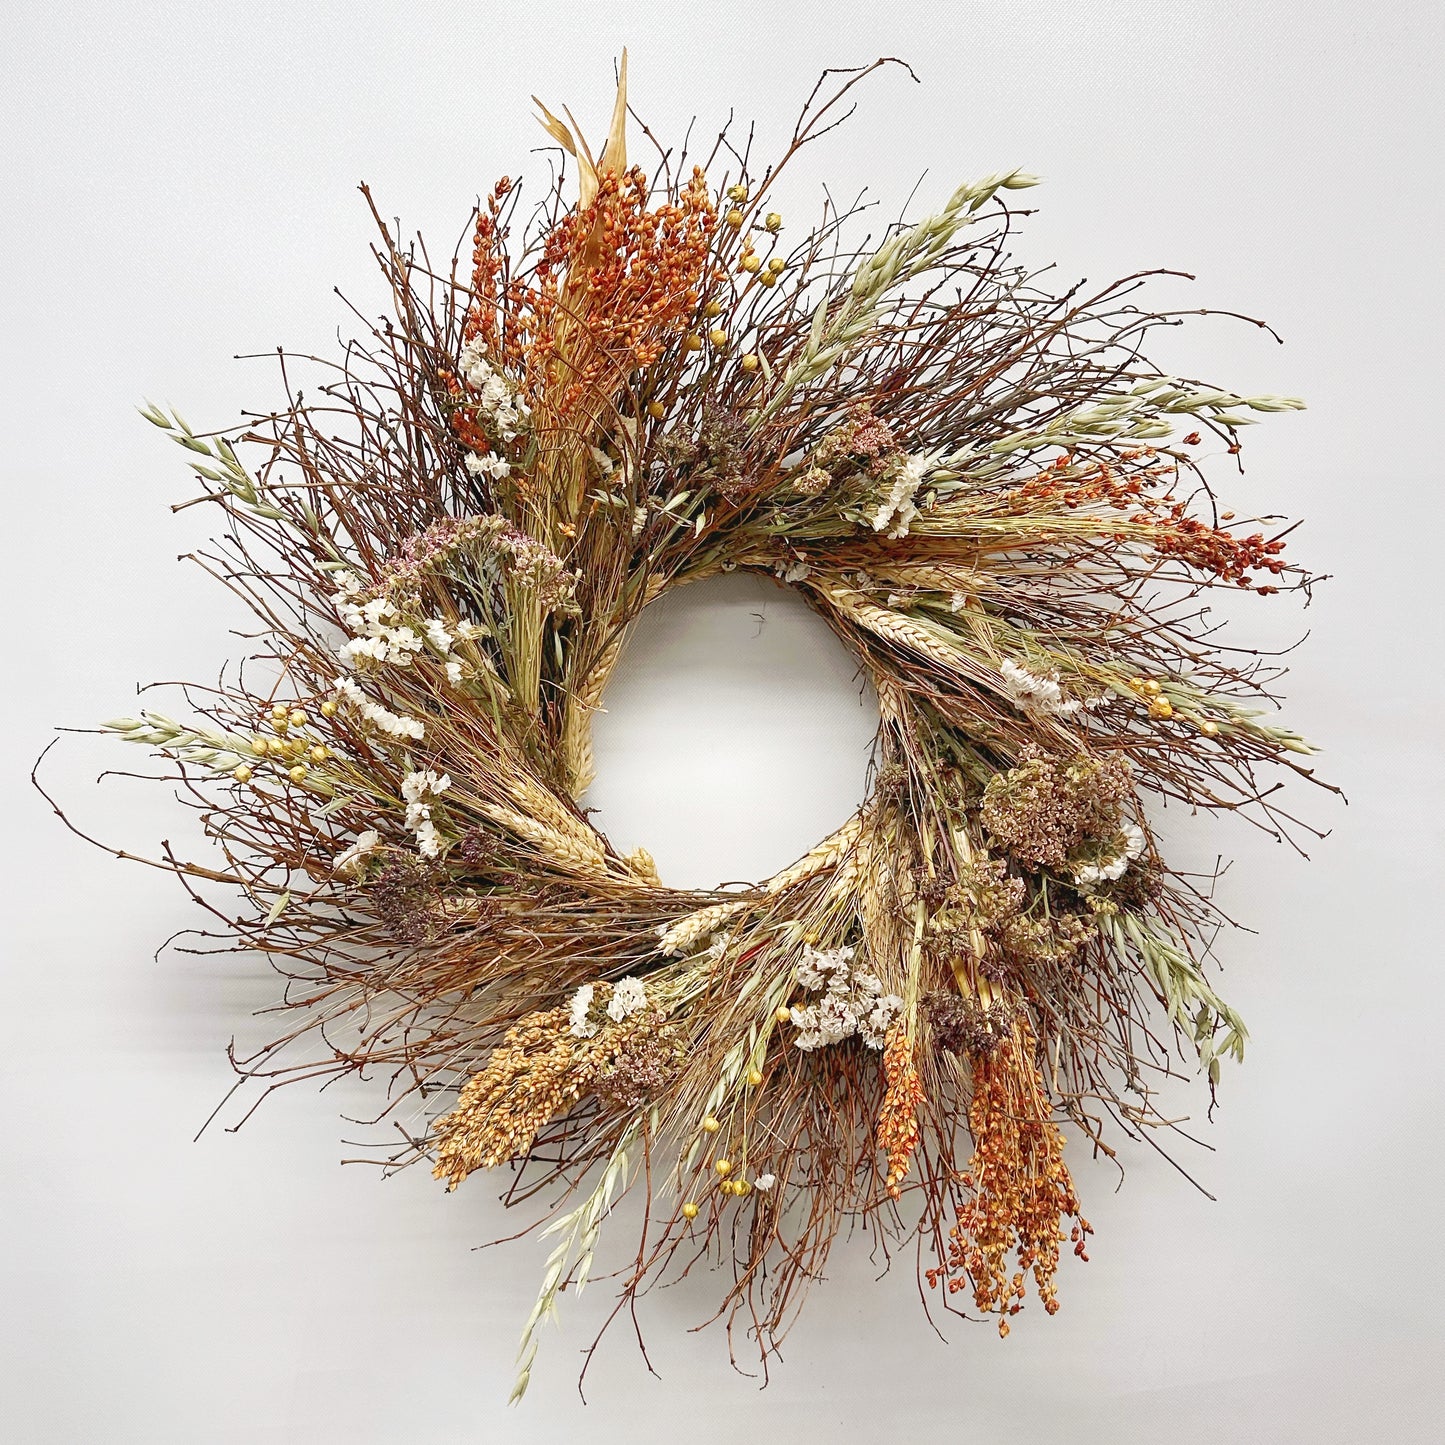 Dried Nature Grains Wreath